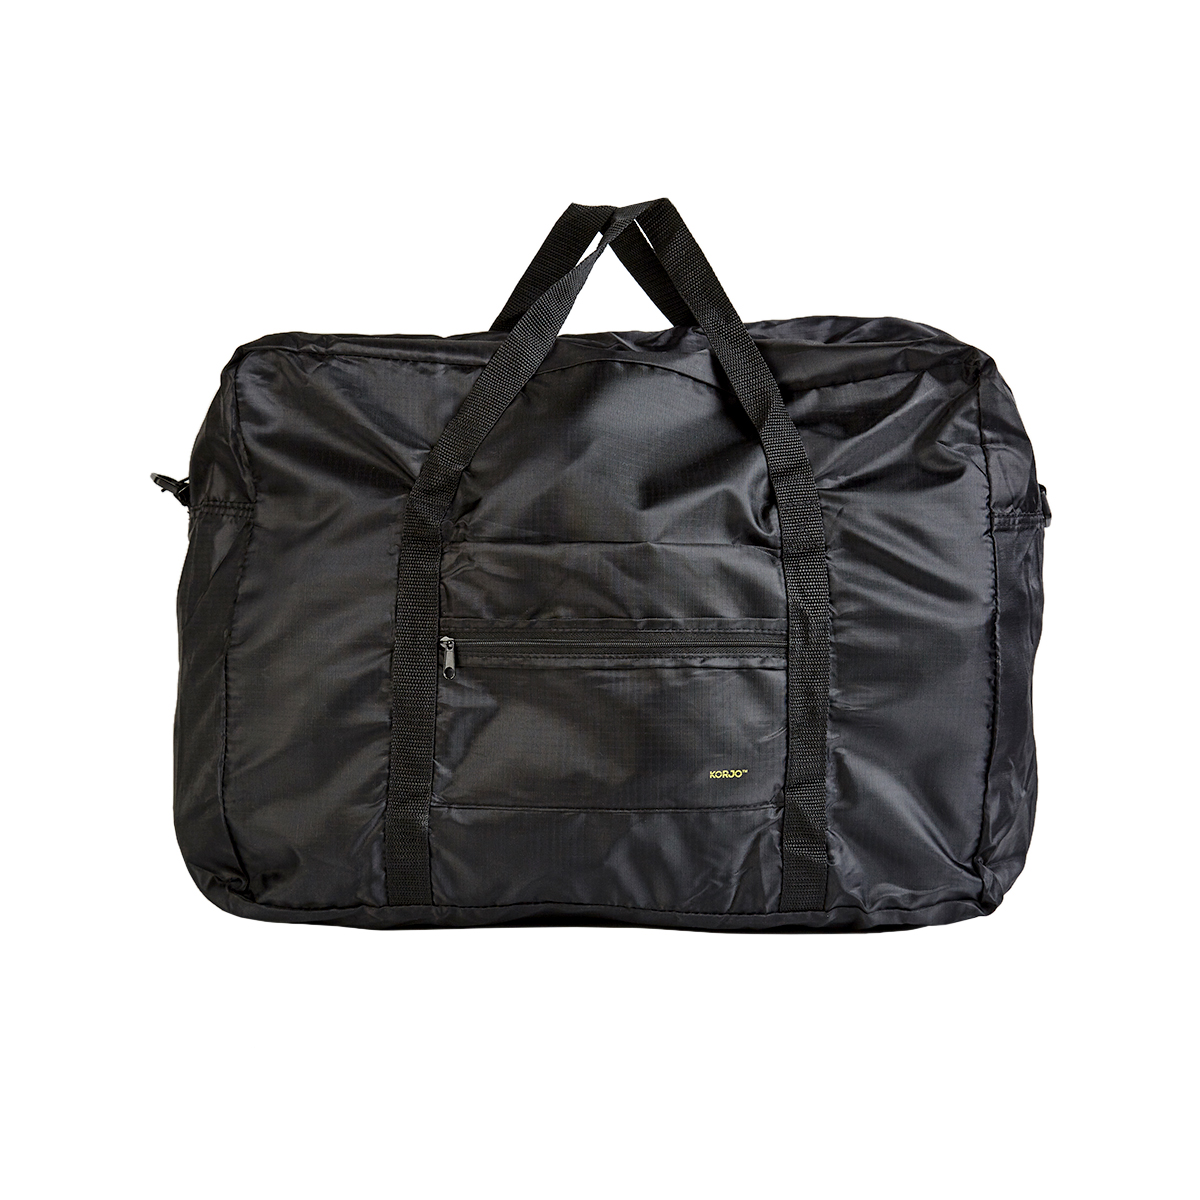 Foldaway Travel Bag